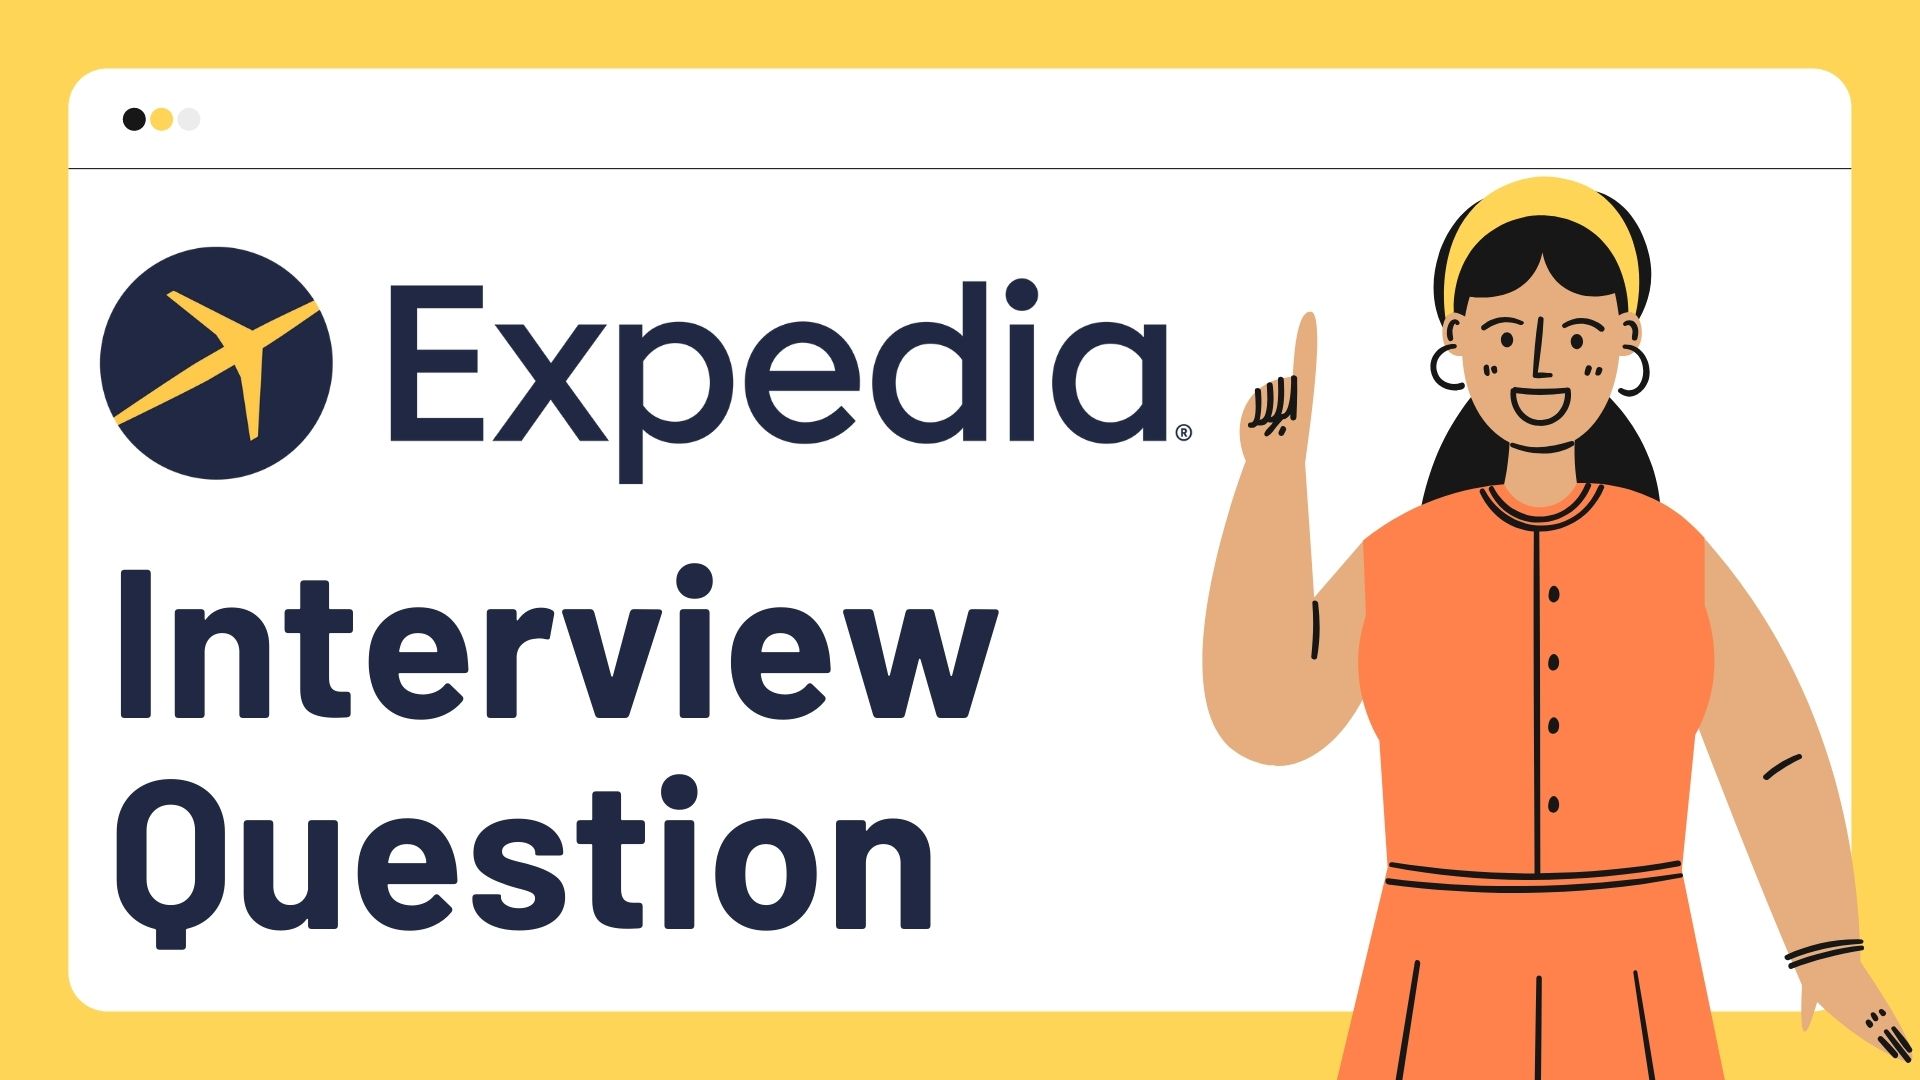 Expedia-intervjuspørsmål